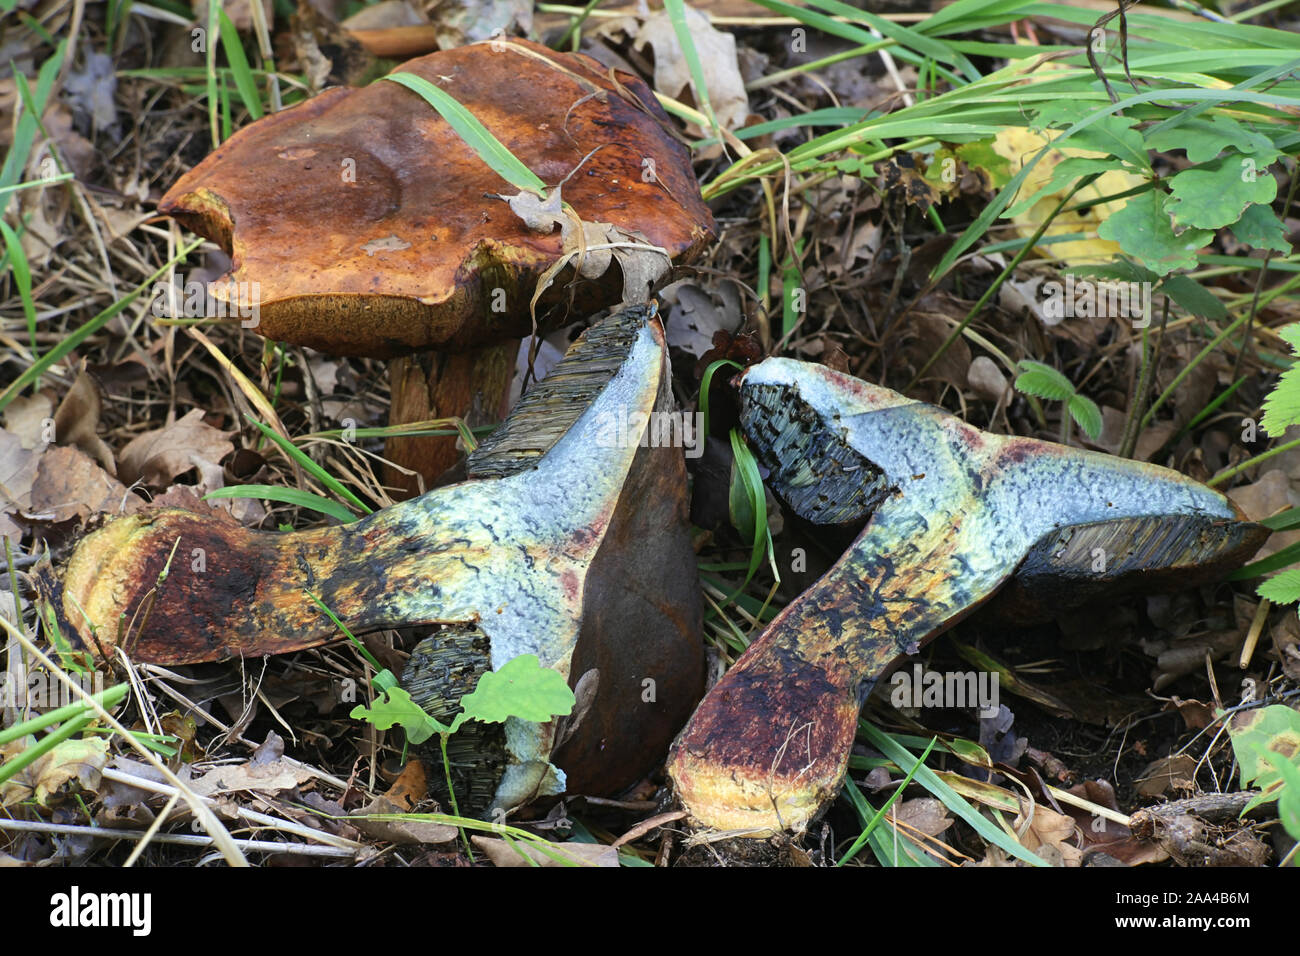 Neoboletus luridiformis, or Boletus luridiformis, known as the scarletina bolete, wild mushroom from Finland Stock Photo